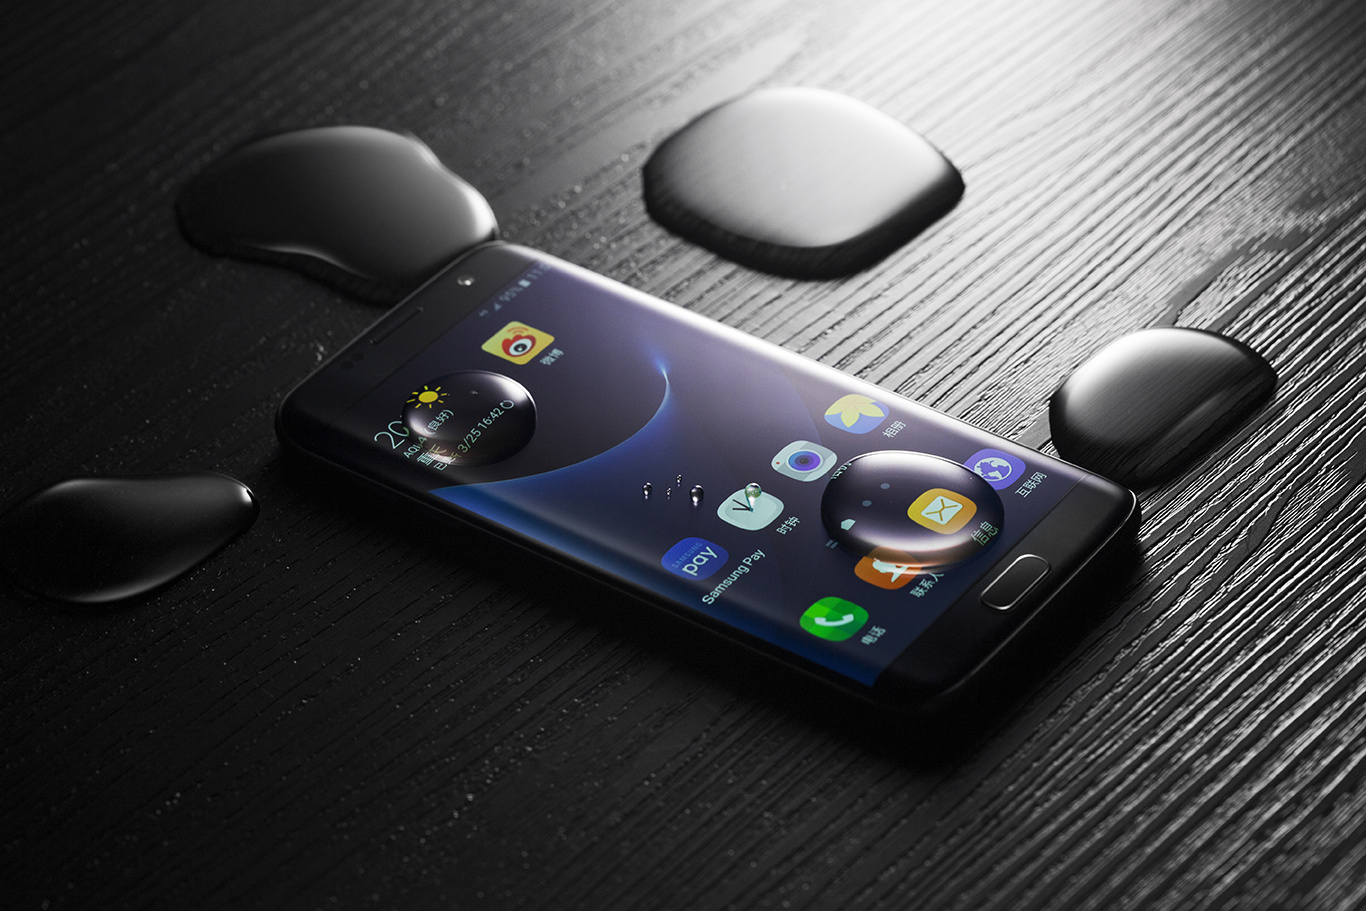 Samsung Galaxy S7 32 GB Unlocked Phone - G930FD Dual SIM - Platinum ...